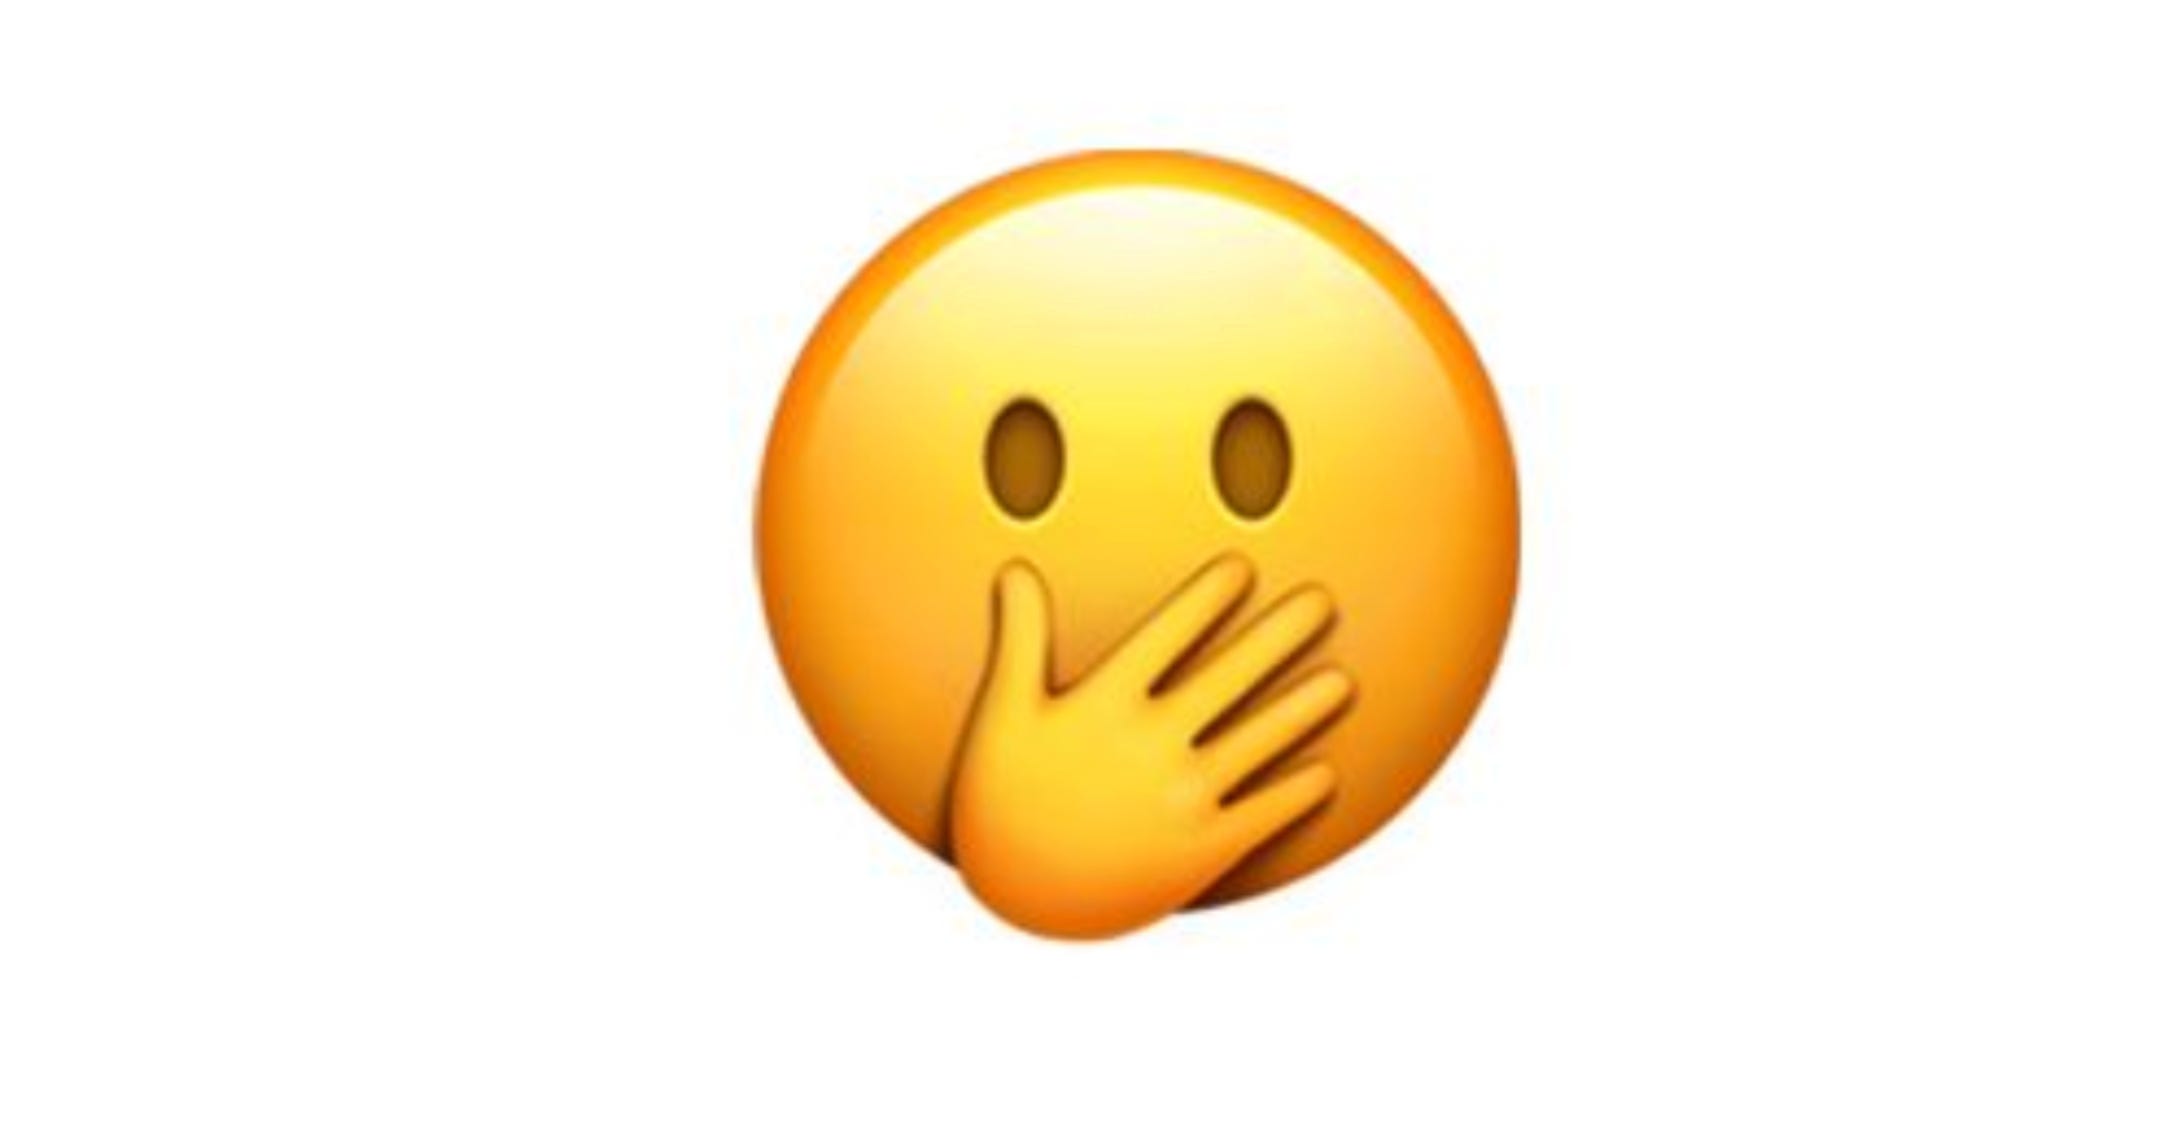 Handshake Emoji Rug 